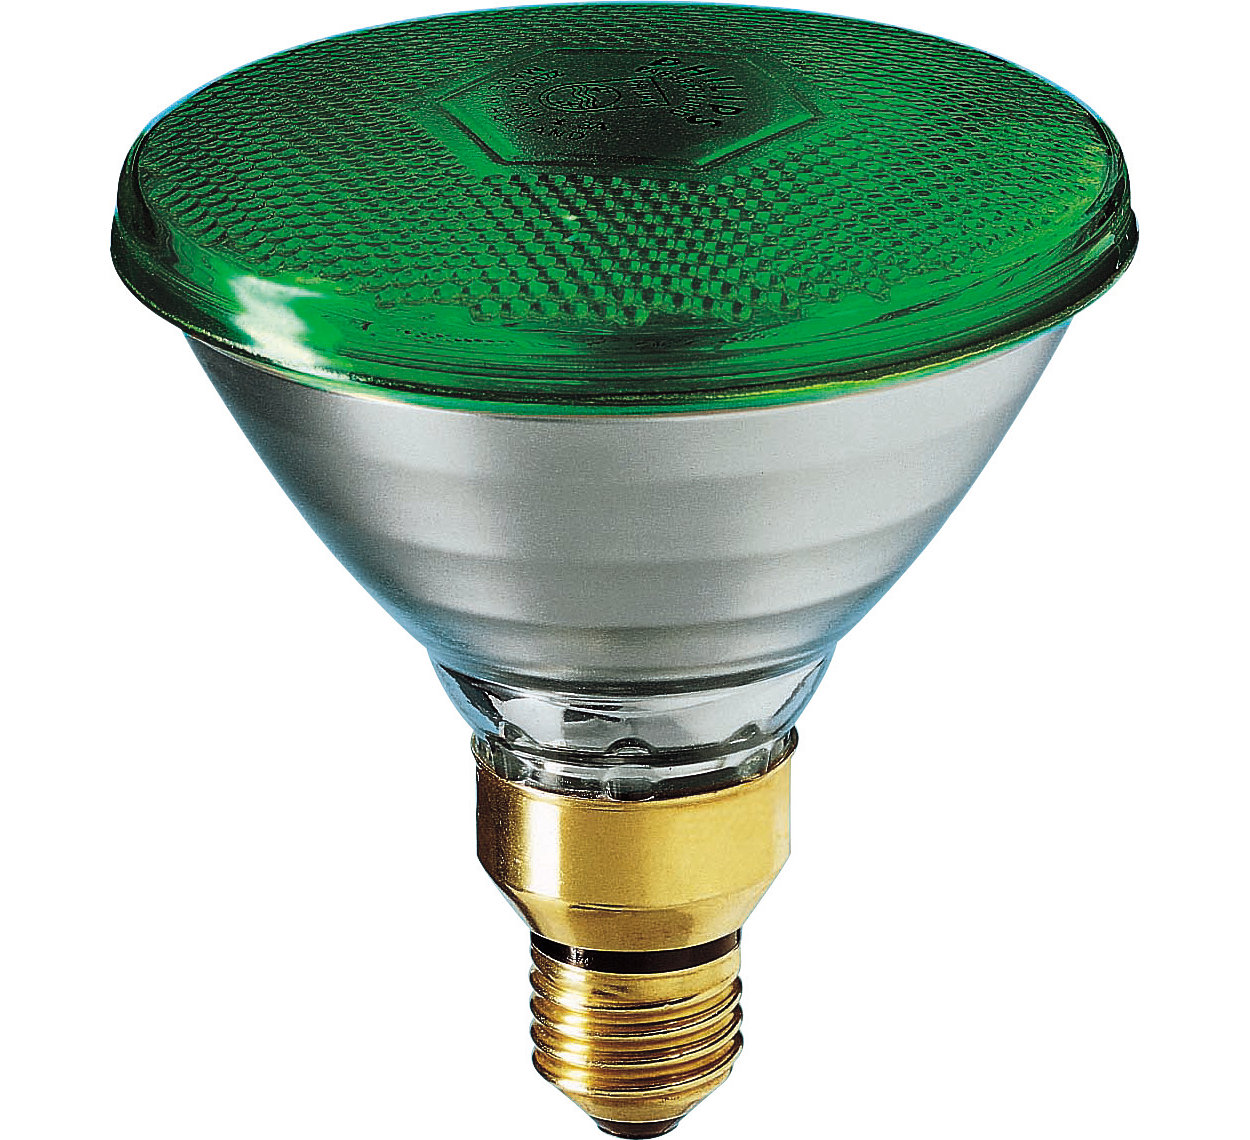 4x 80W PAR38 Green Coloured Halogen Flood Reflector ES E27 Light Bulb Lamp 